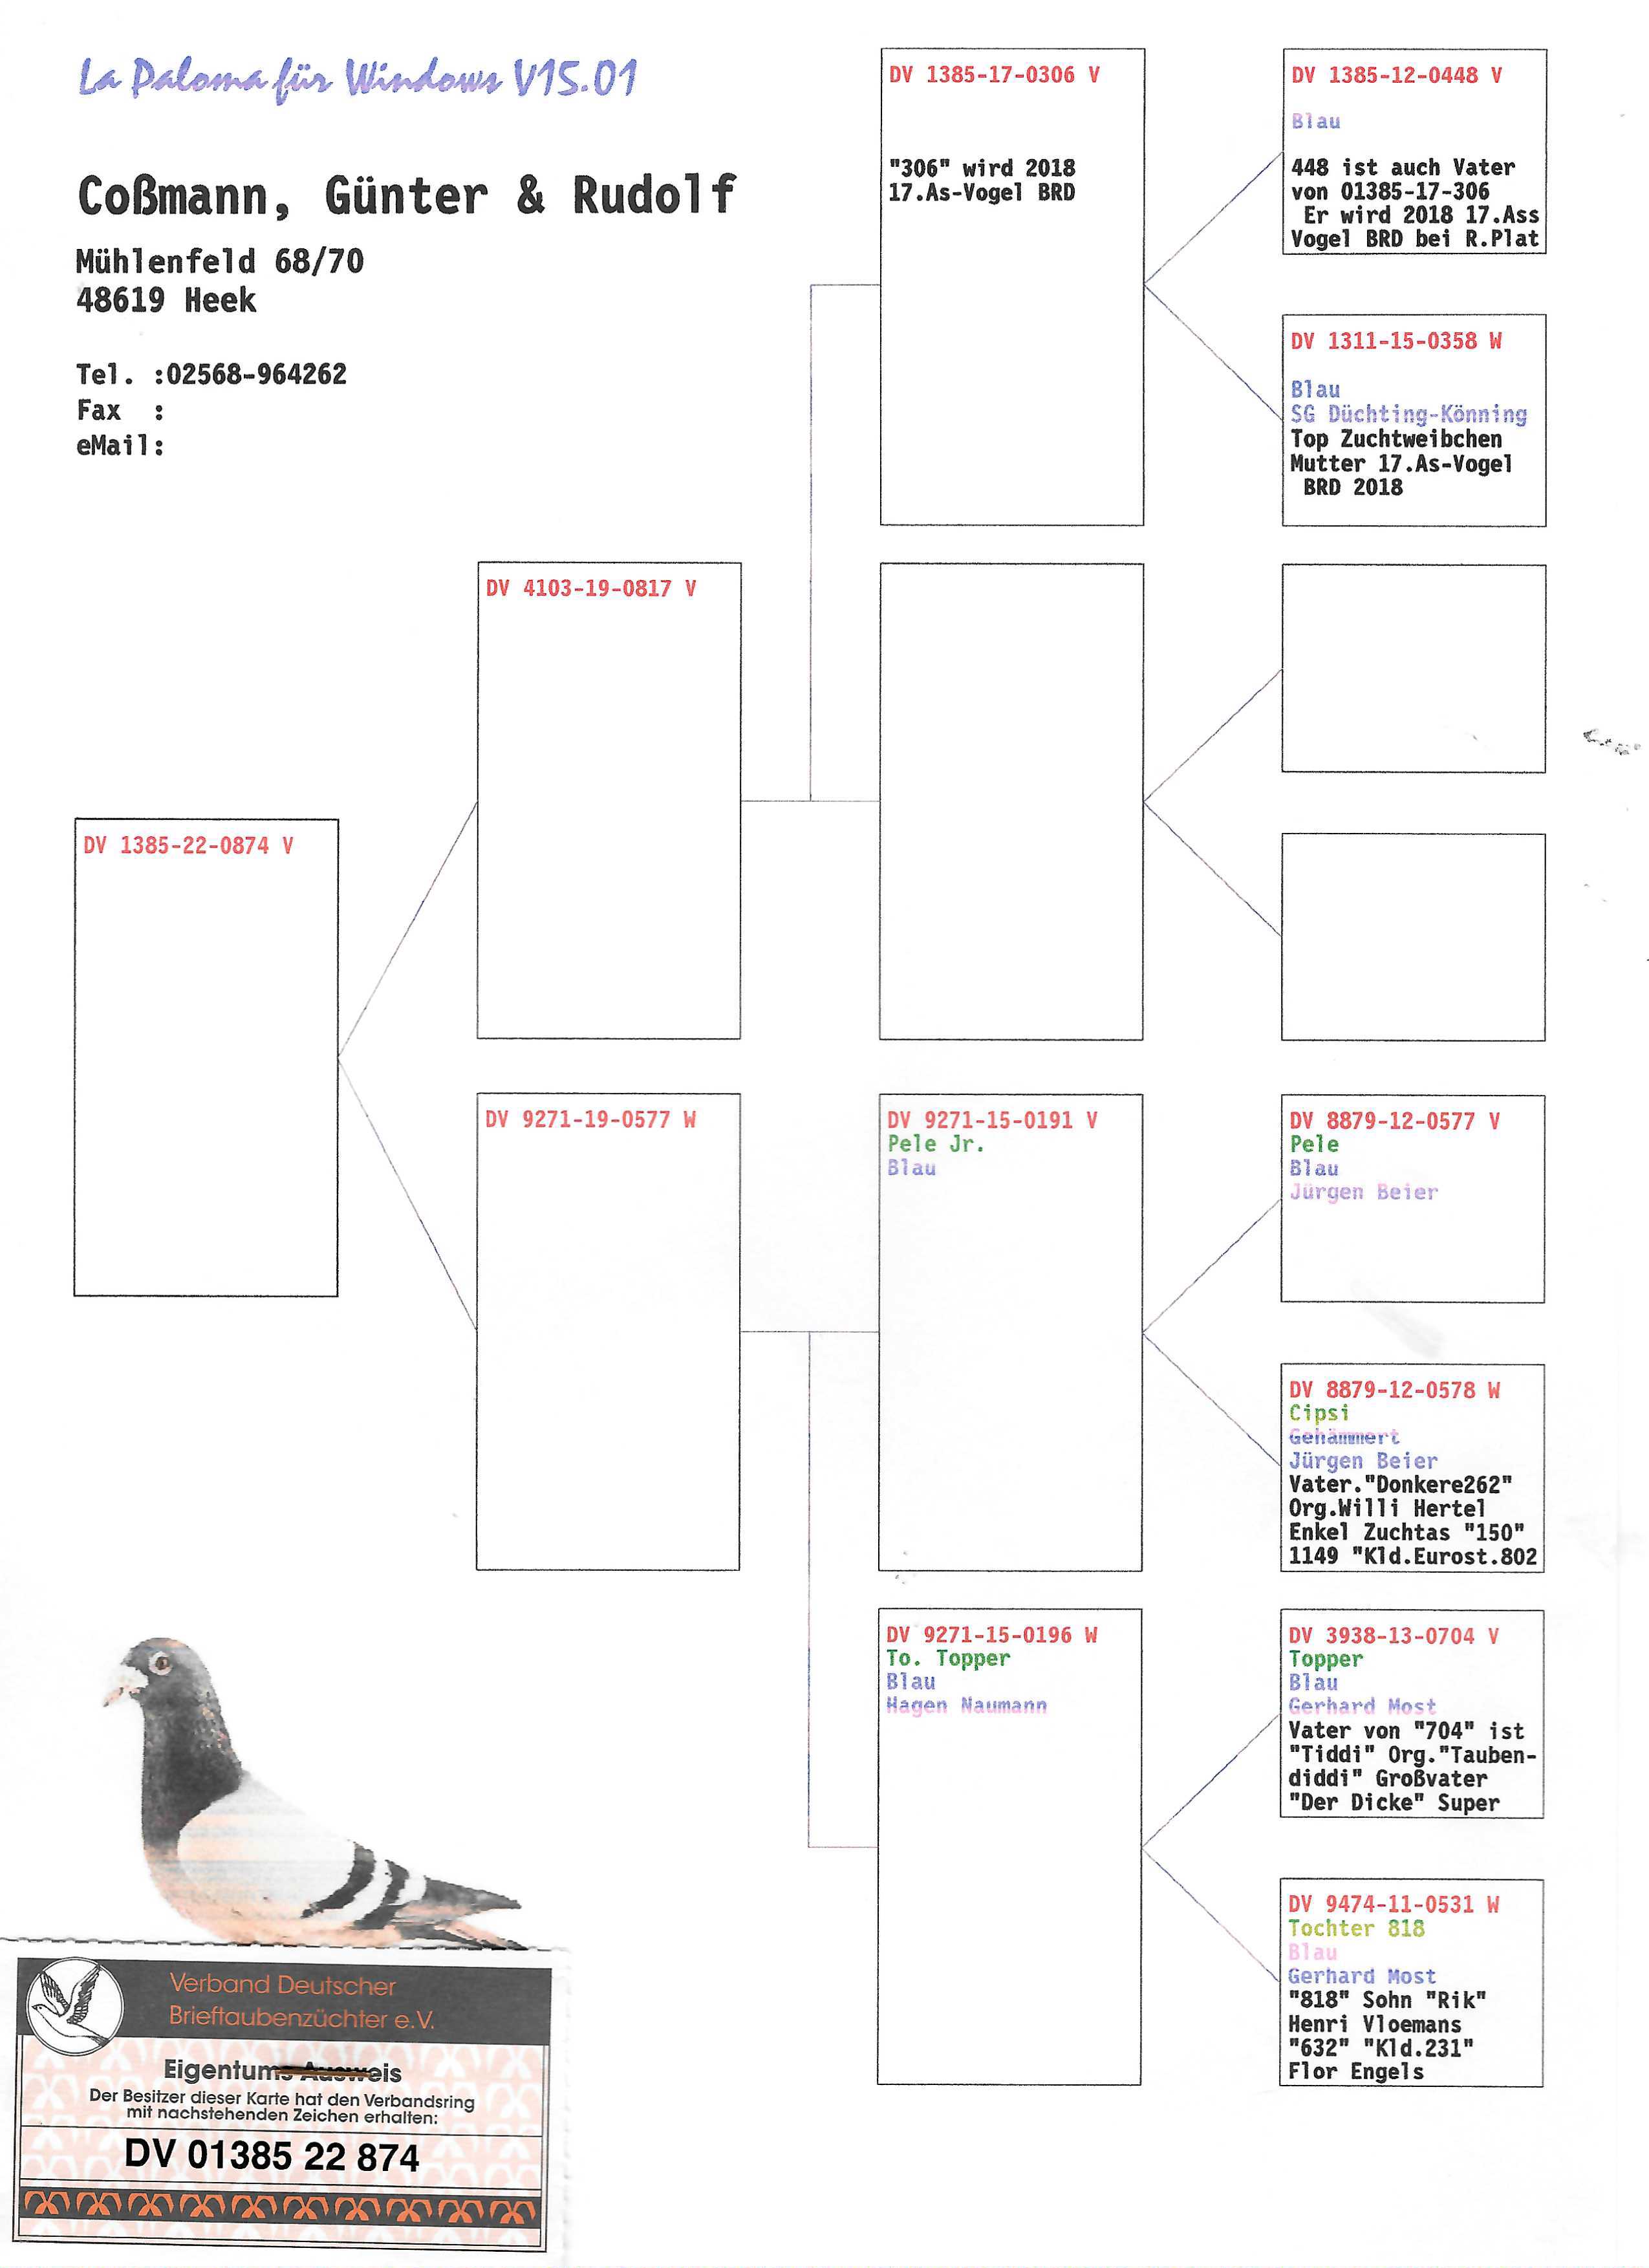 Pigeon pedigree image